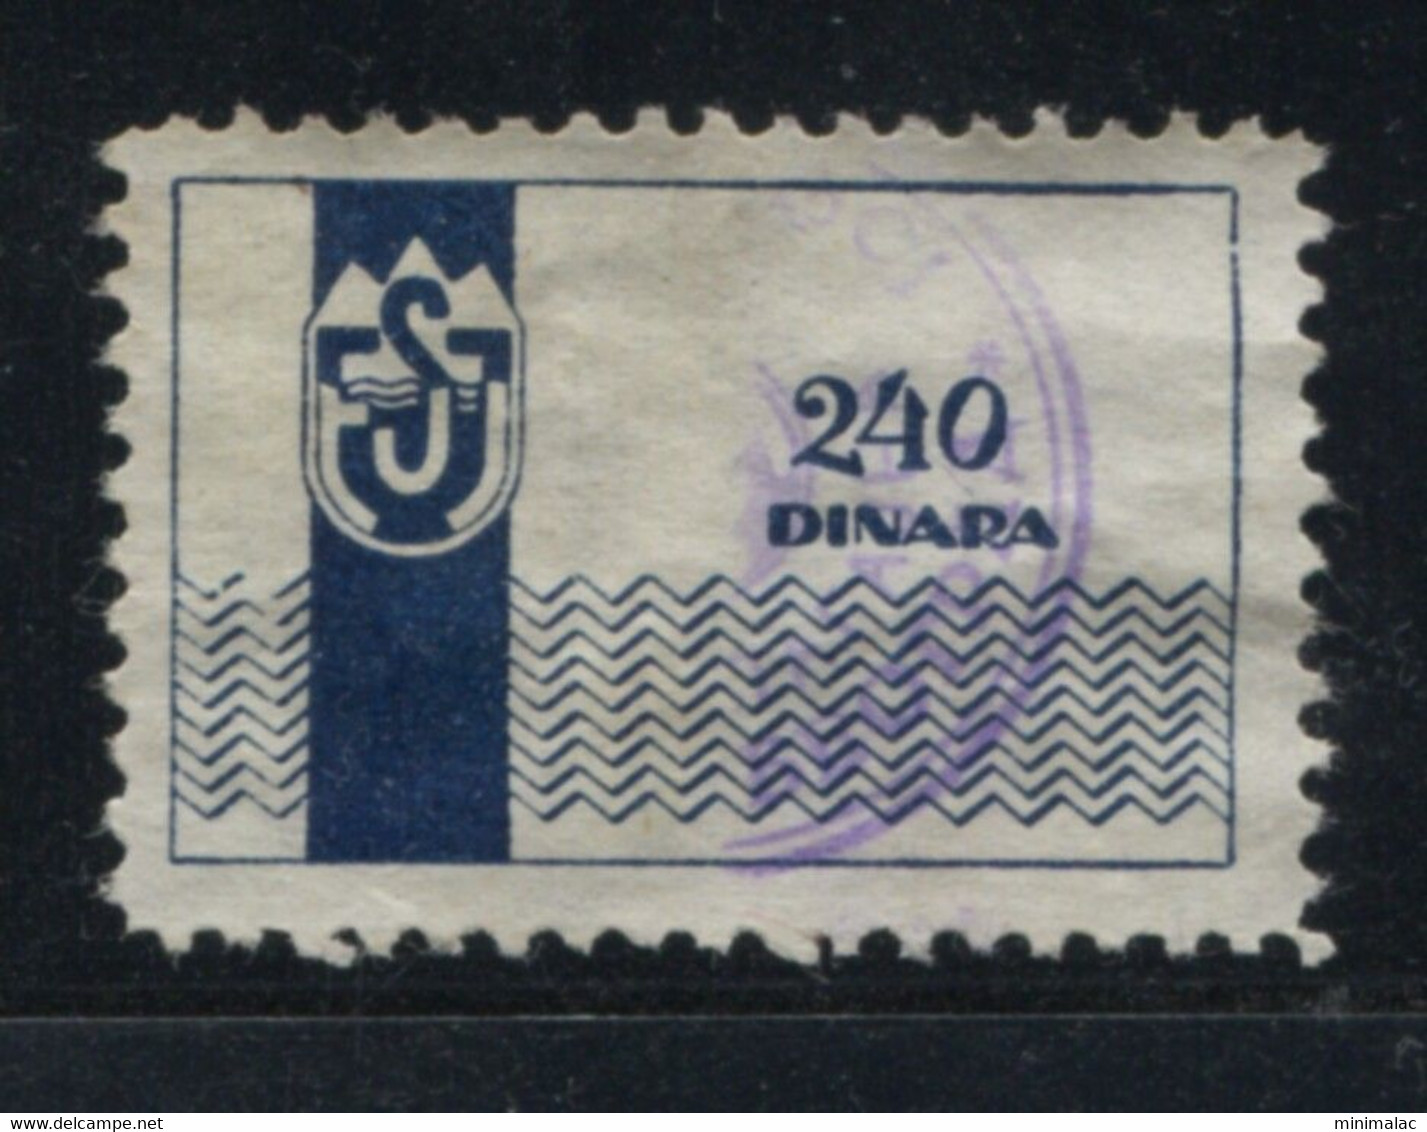 Yugoslavia 1950s, Stamp For Membership Ferijalni Savez - Revenue, Tax Stamp, 240din - Service